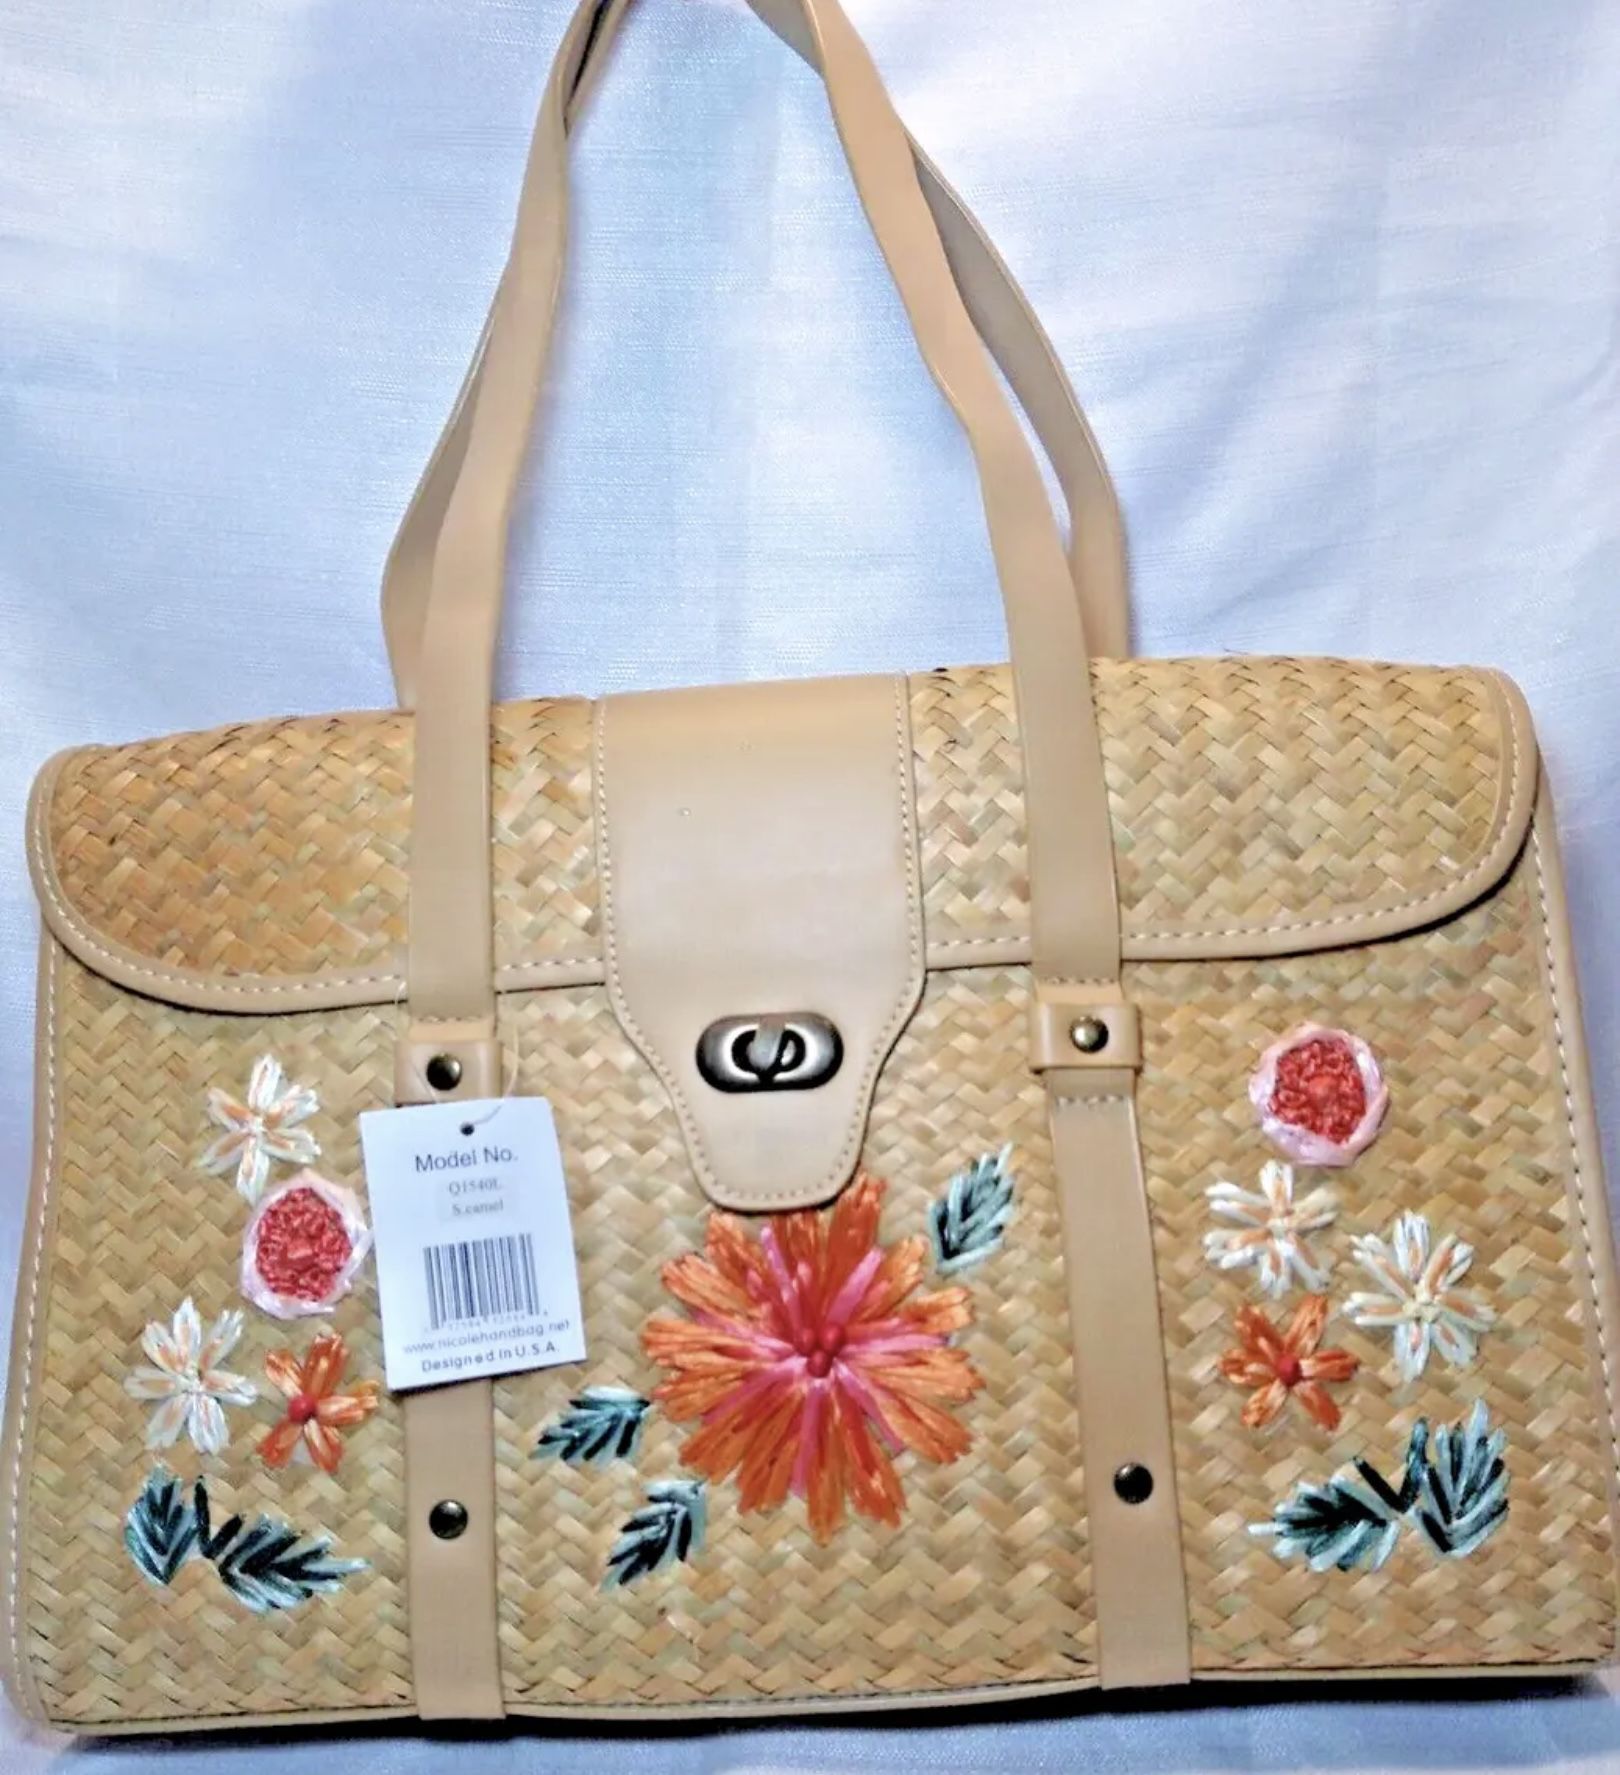 Straw Shoulder Bag Purse Flower Design Nicole Lee New w/Tag Spring Purse